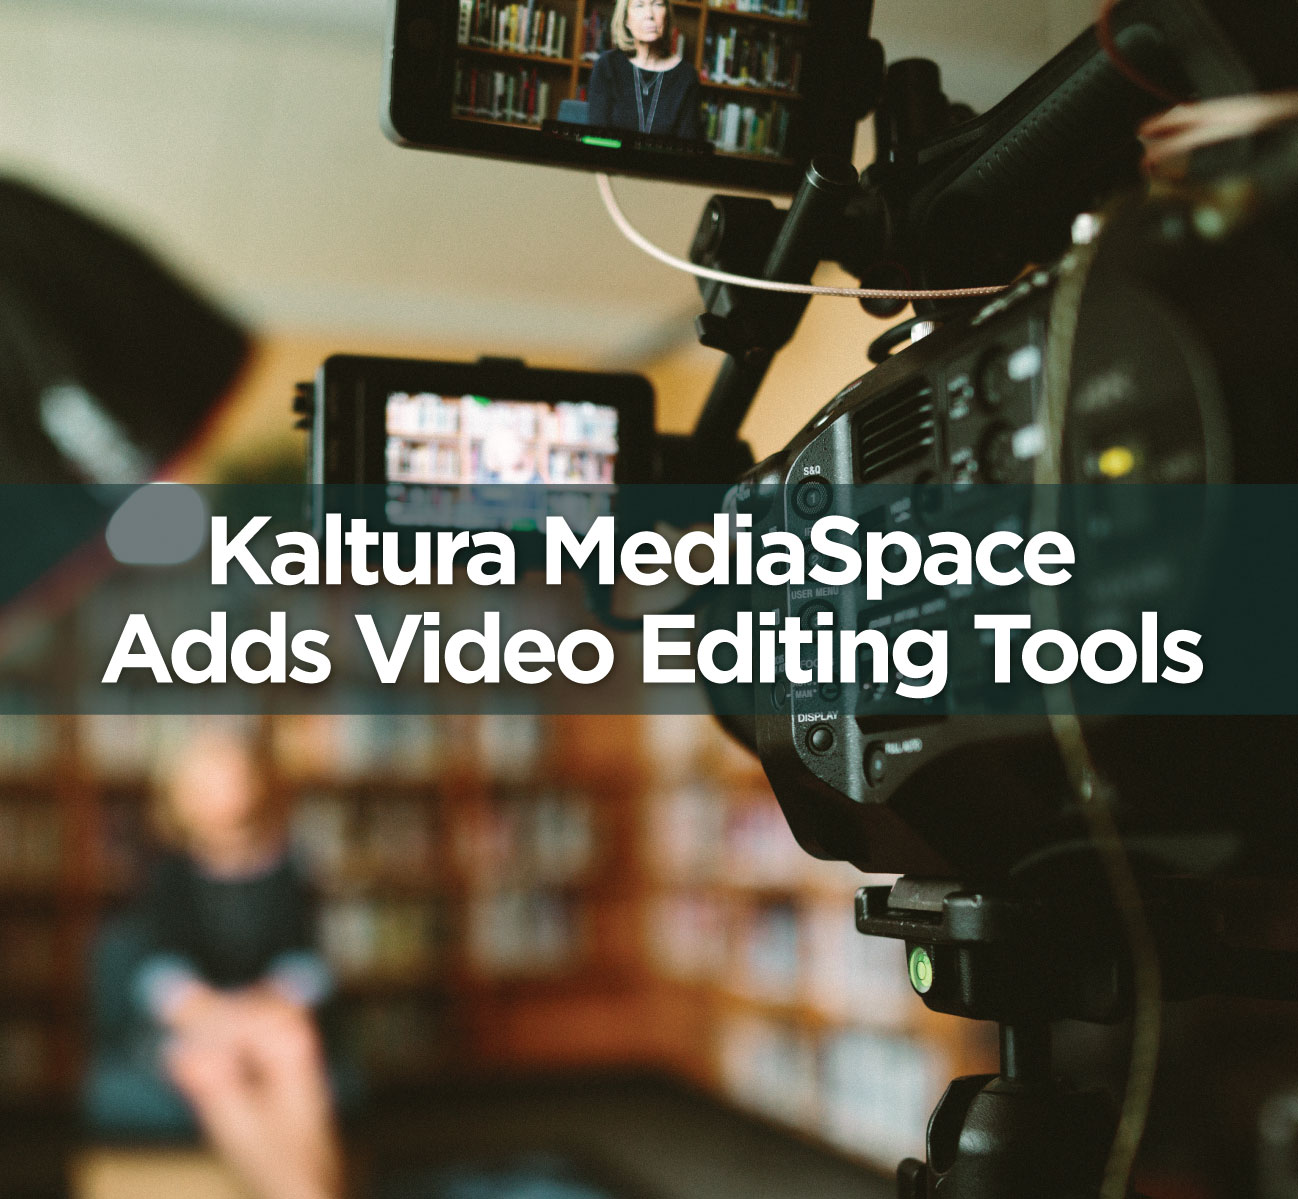 Video camera photo to illustrate Kaltura MediaSpace adding new video editing tools